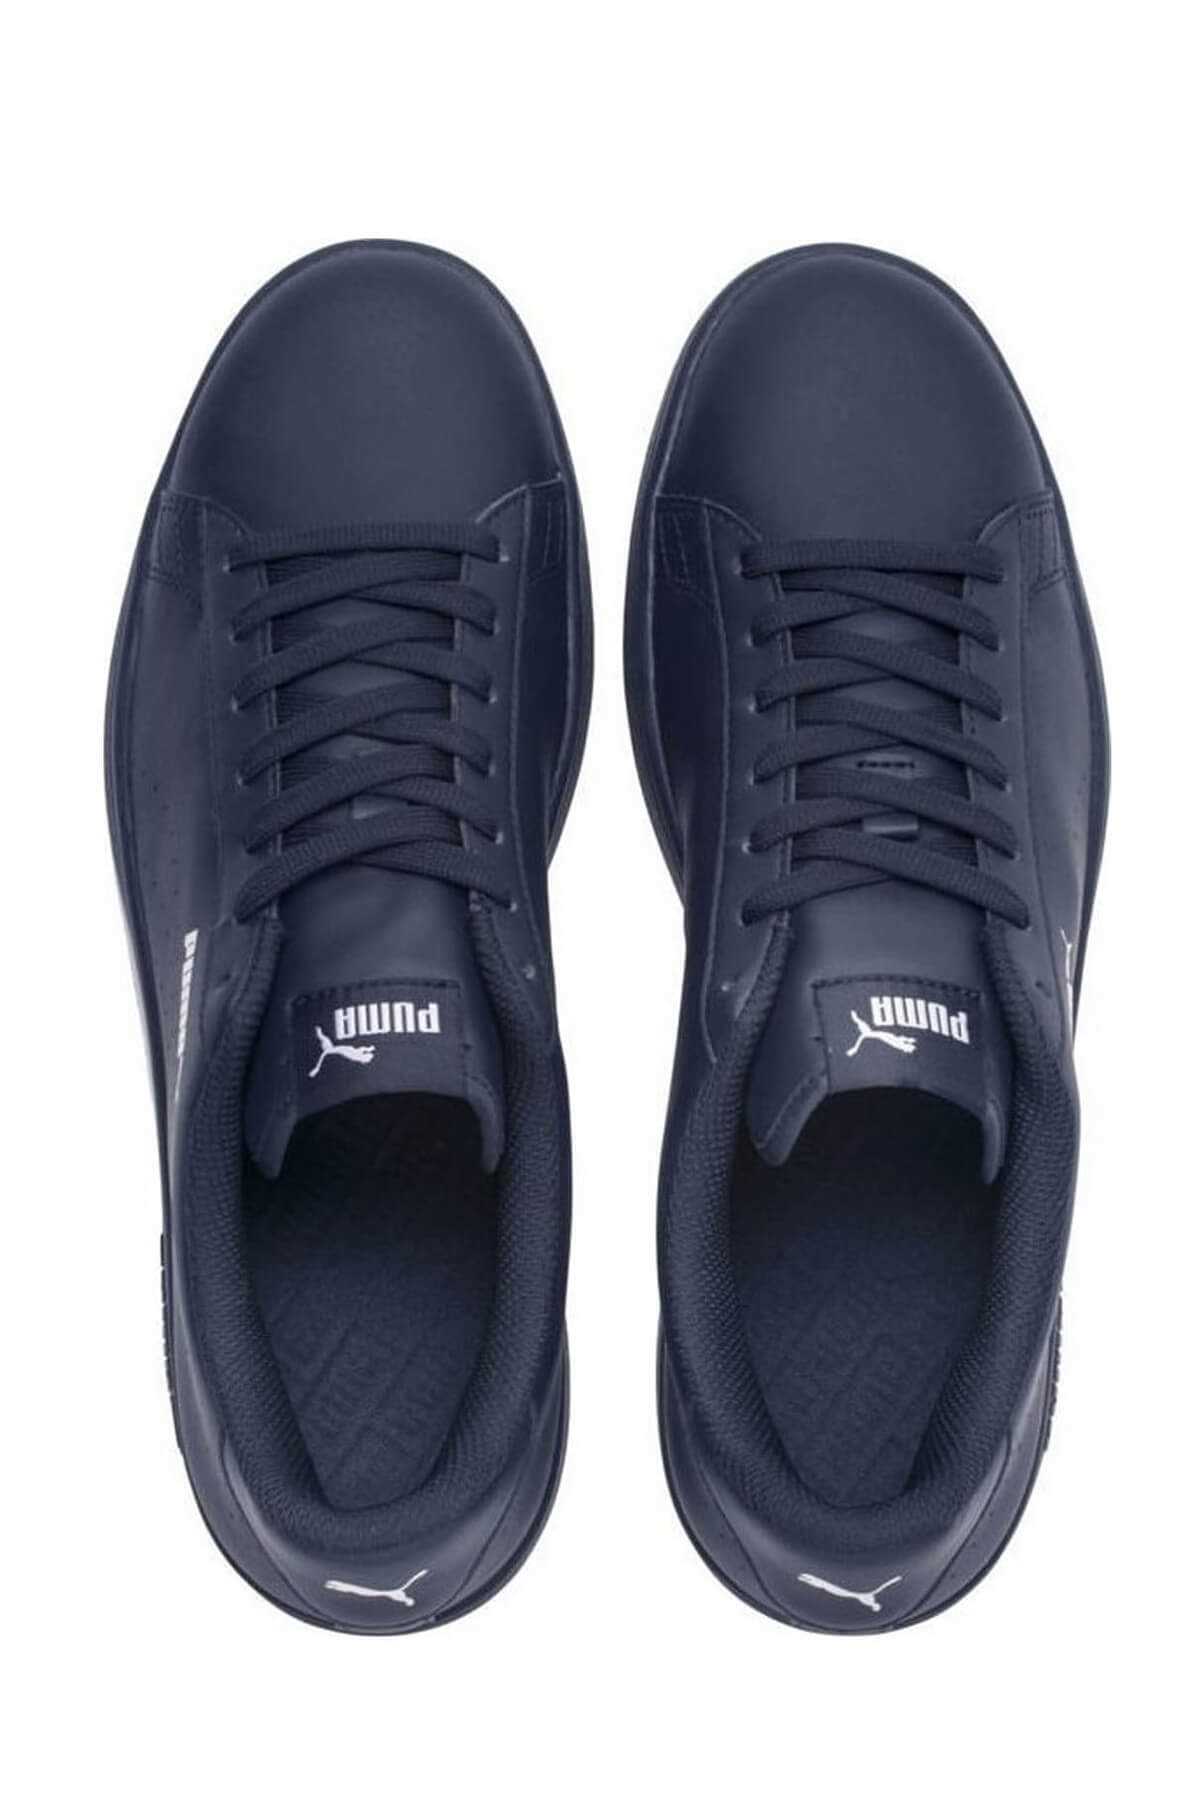 خرید پستی کفش اسپرت طرح Smash شیک برند پوما رنگ لاجوردی کد ty3689978